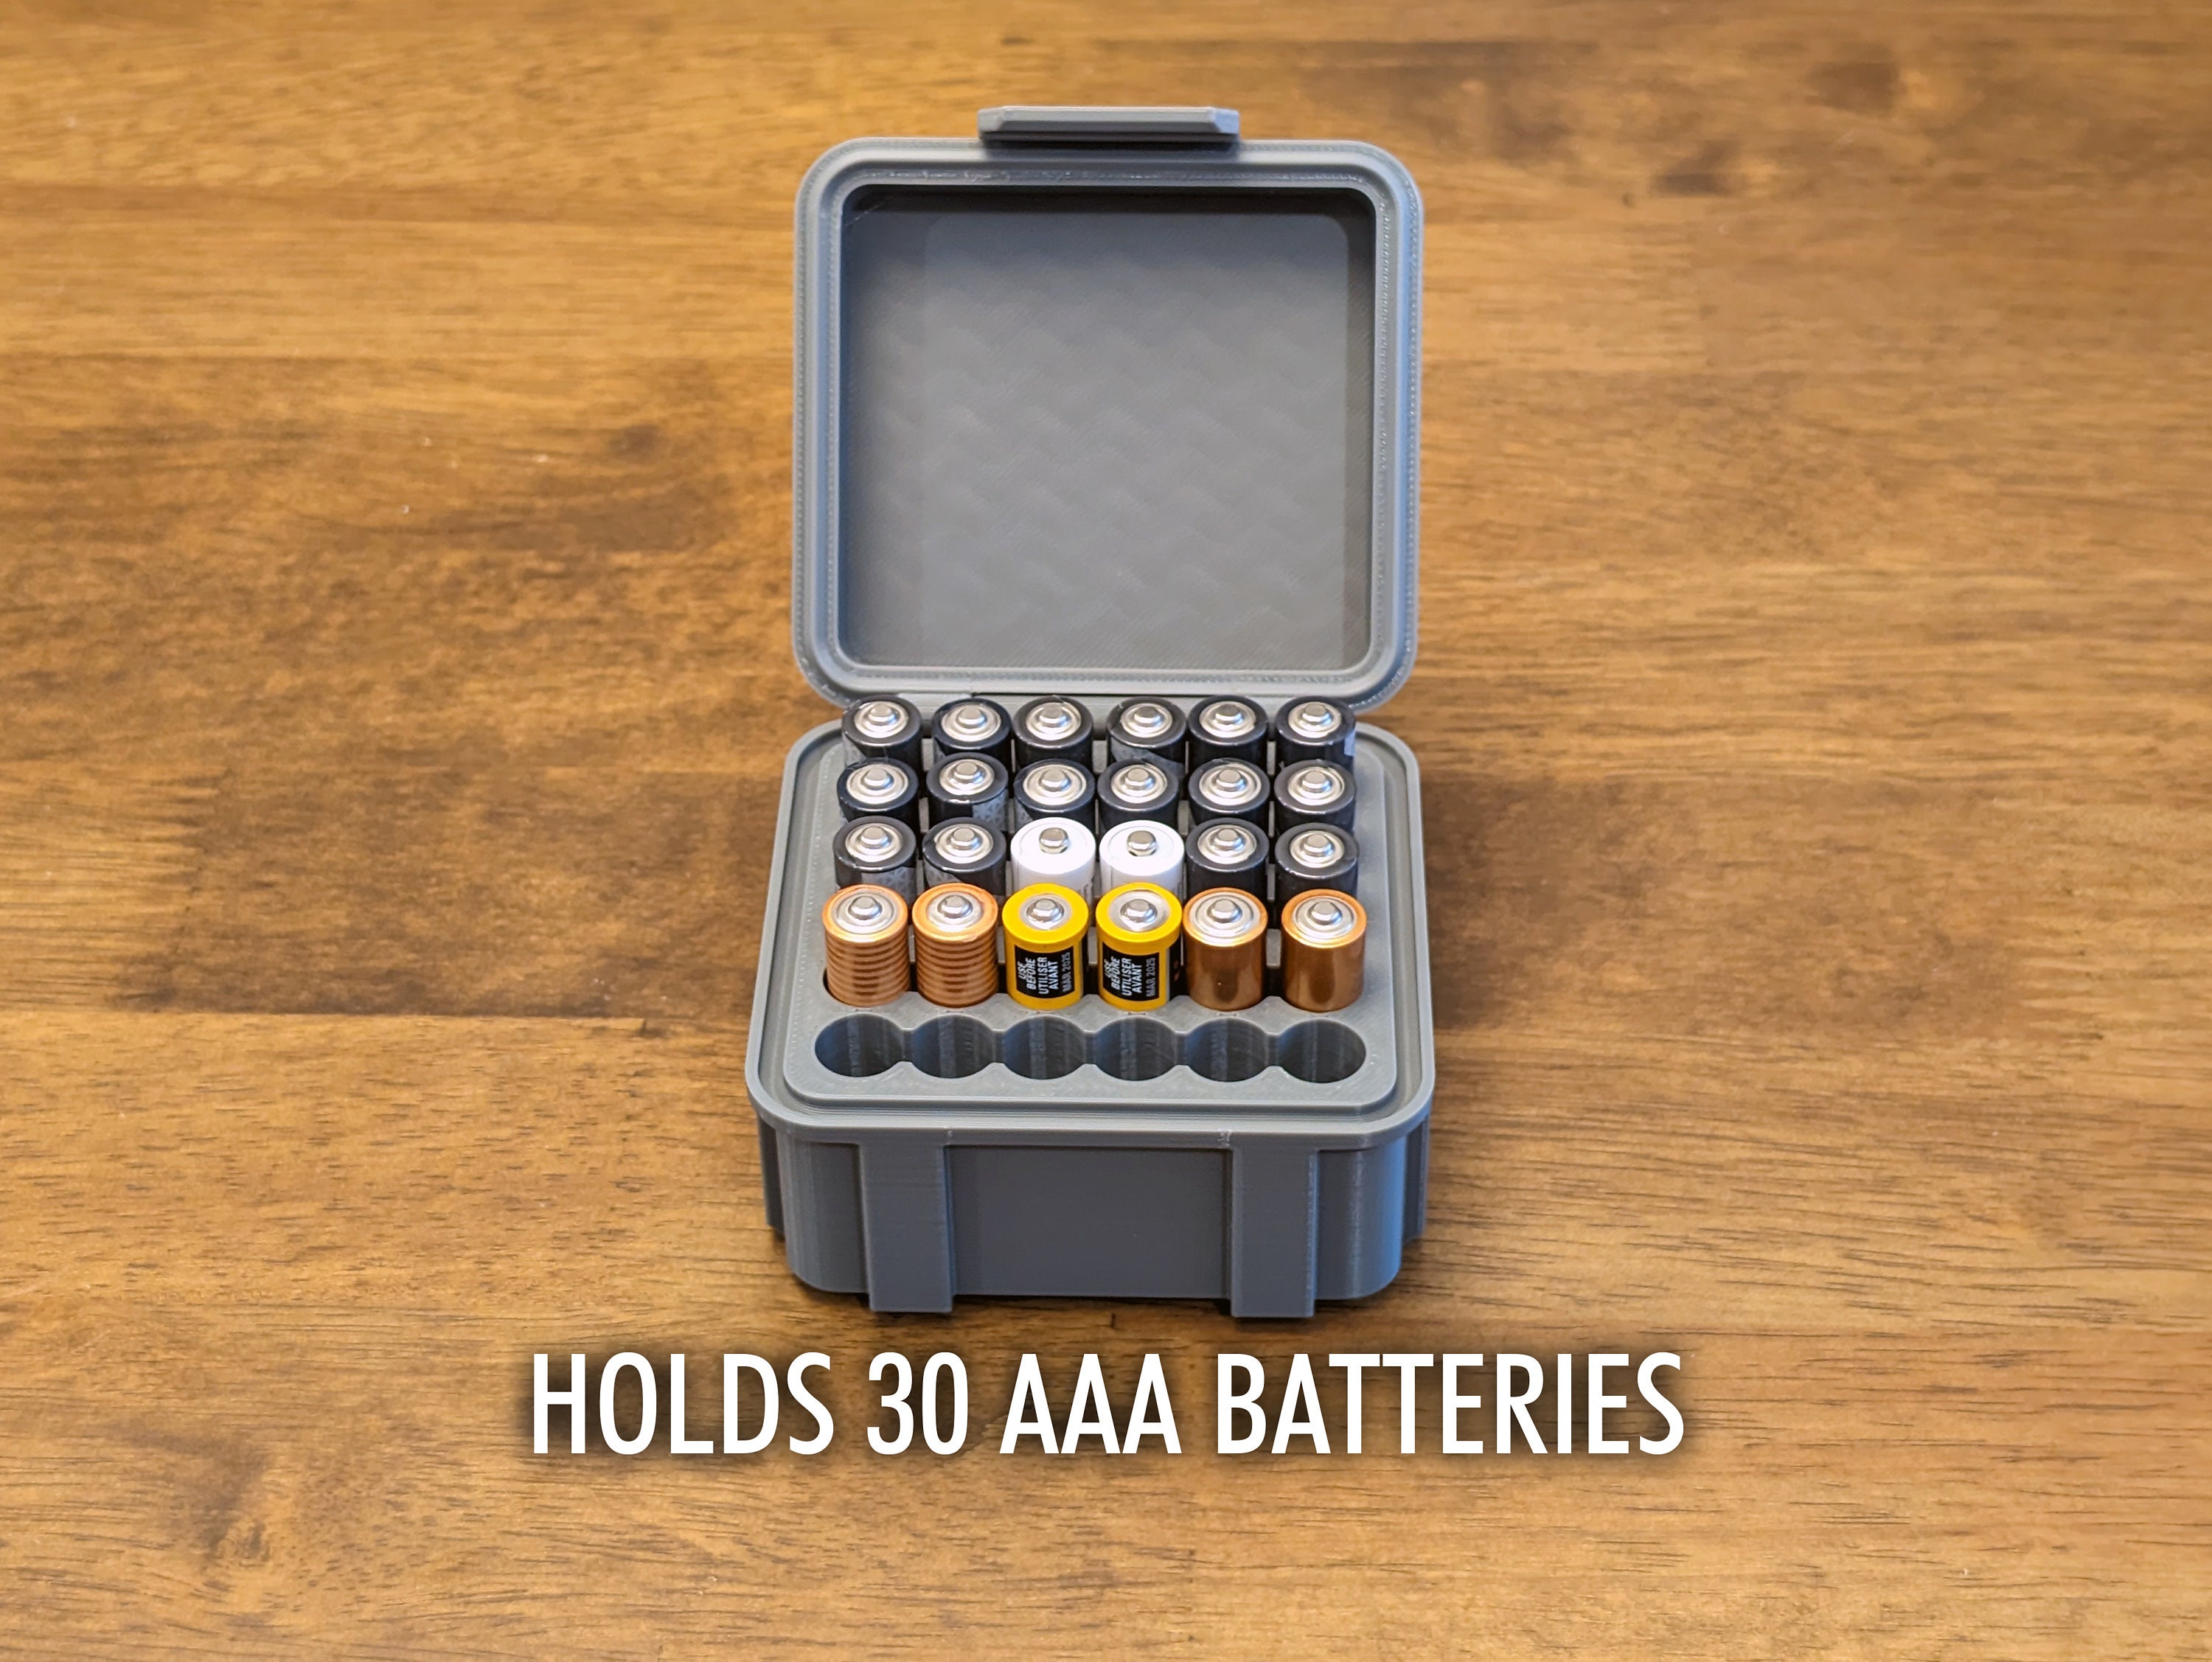 Battery Storage Box AA AAA Large XL Capacity Sturdy Rugged